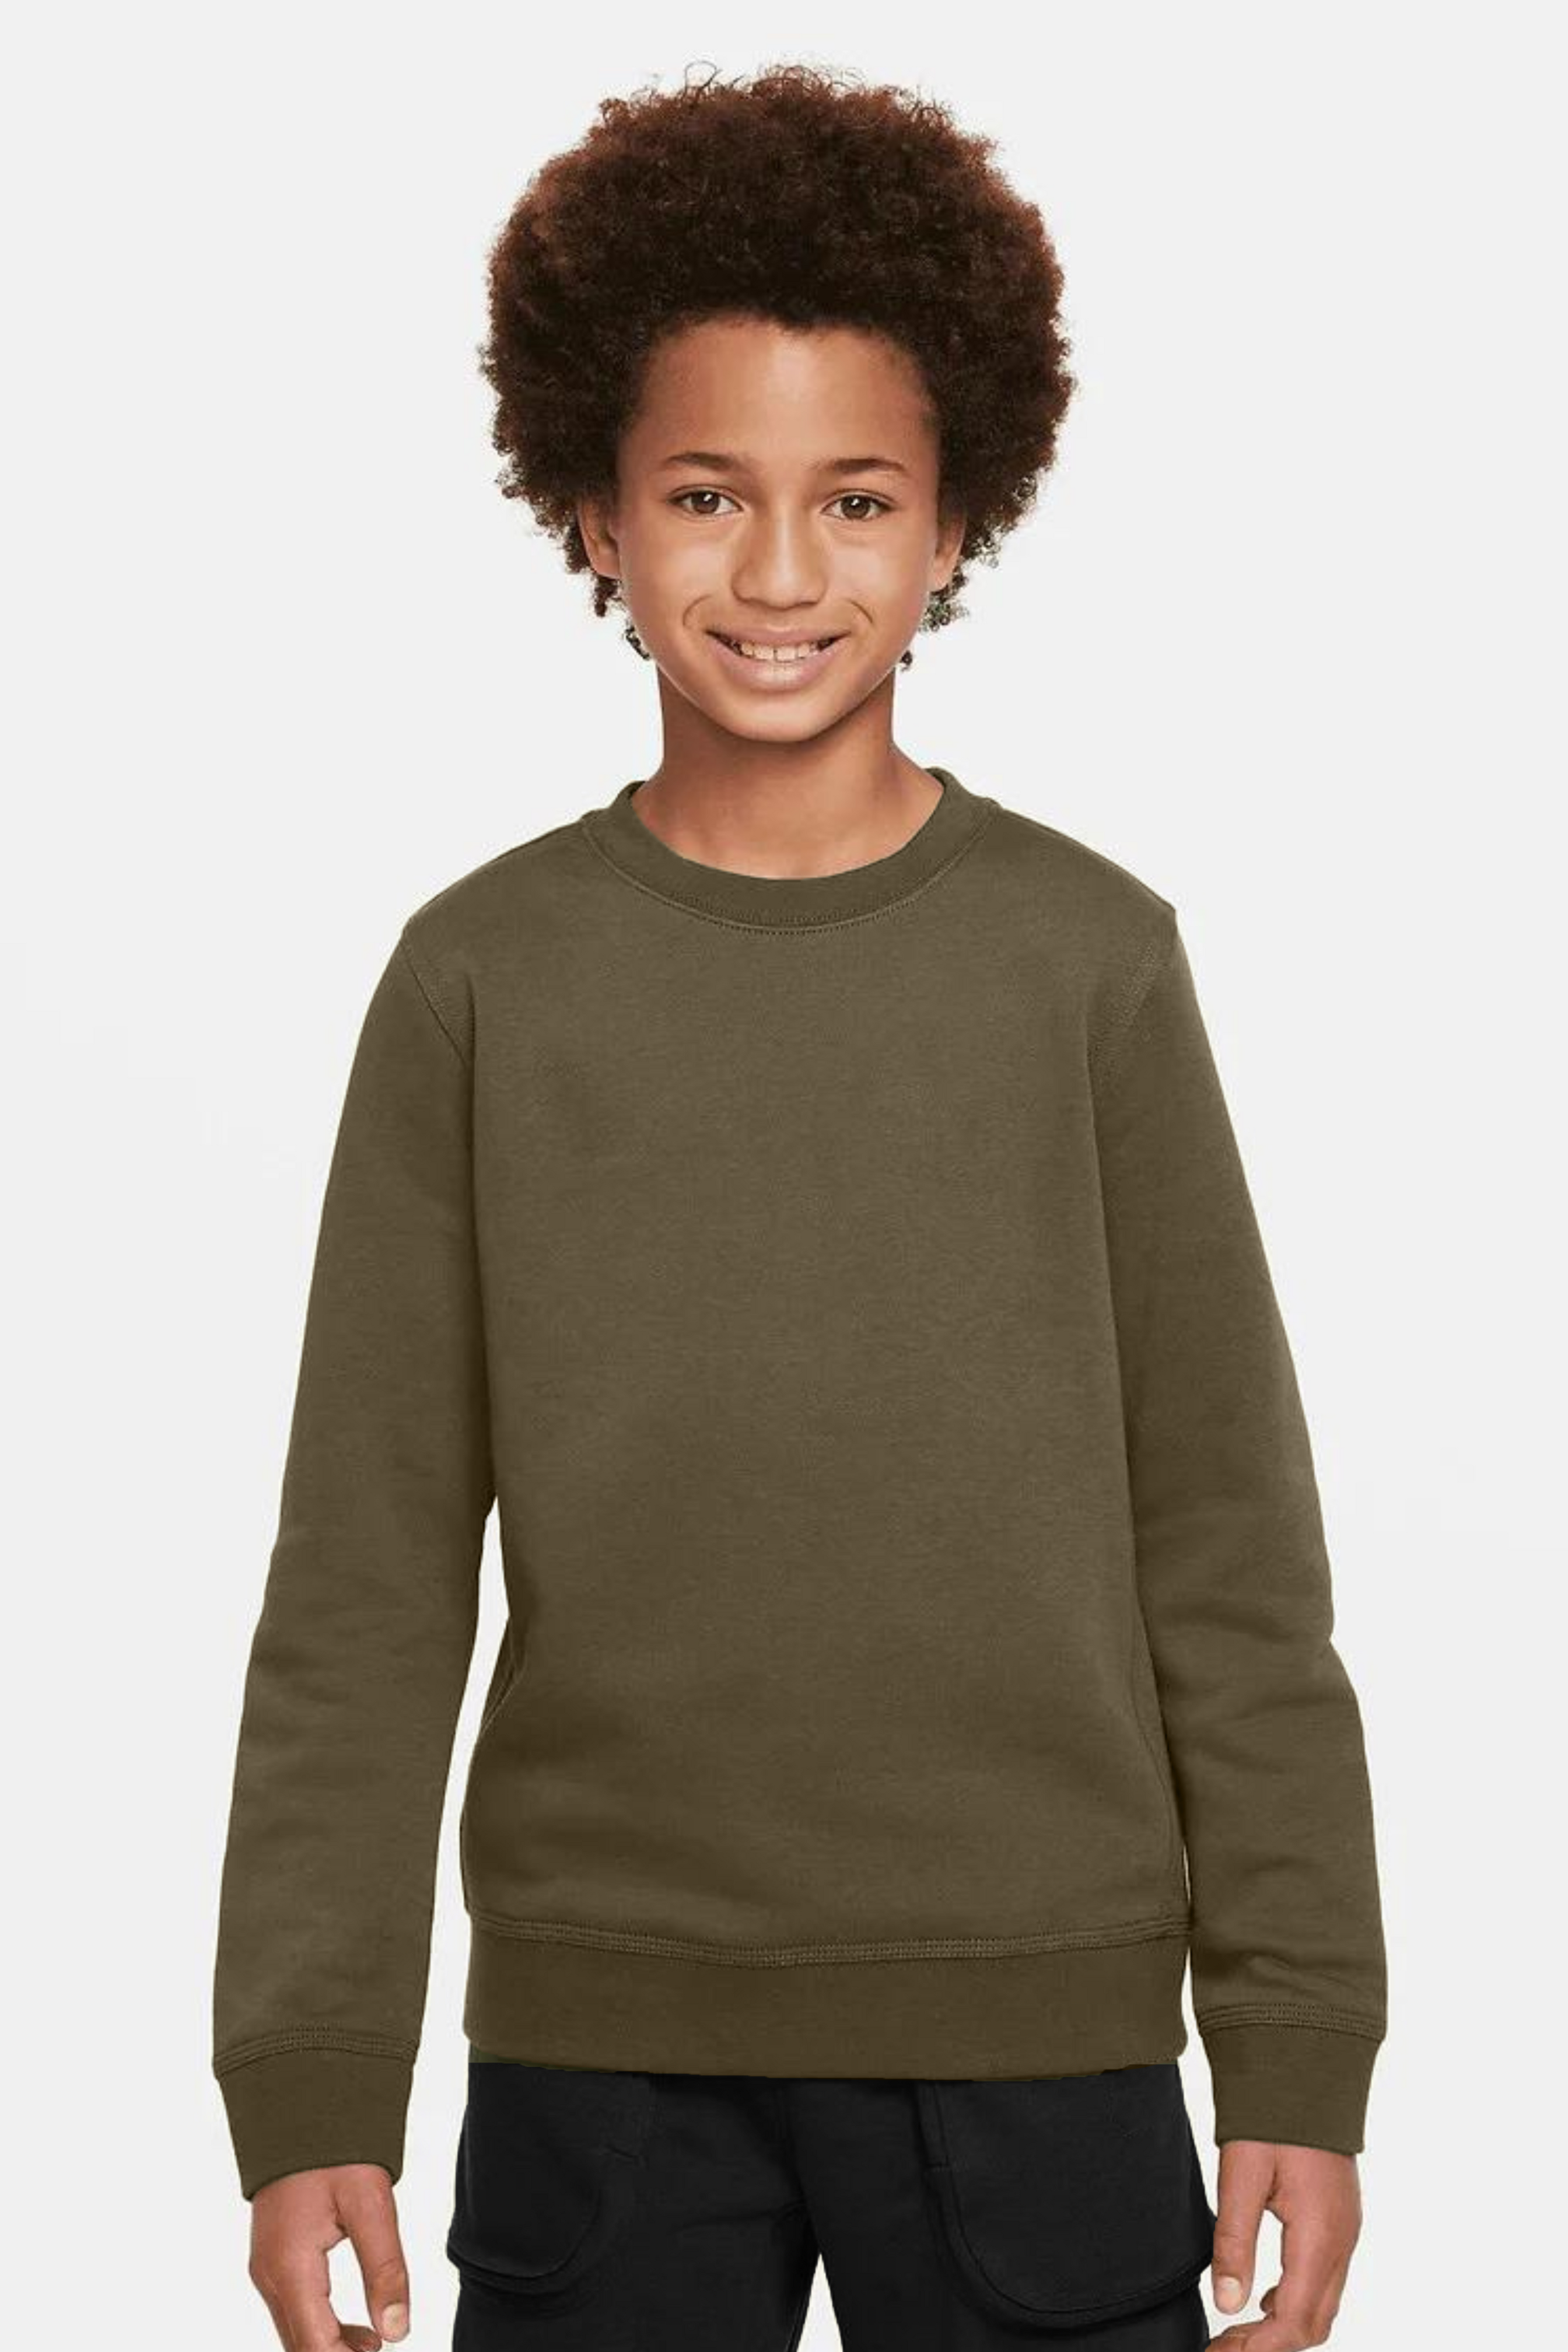 Kids Solid Unisex Full Sleeves Sweat Shirt (Fleece) Brown